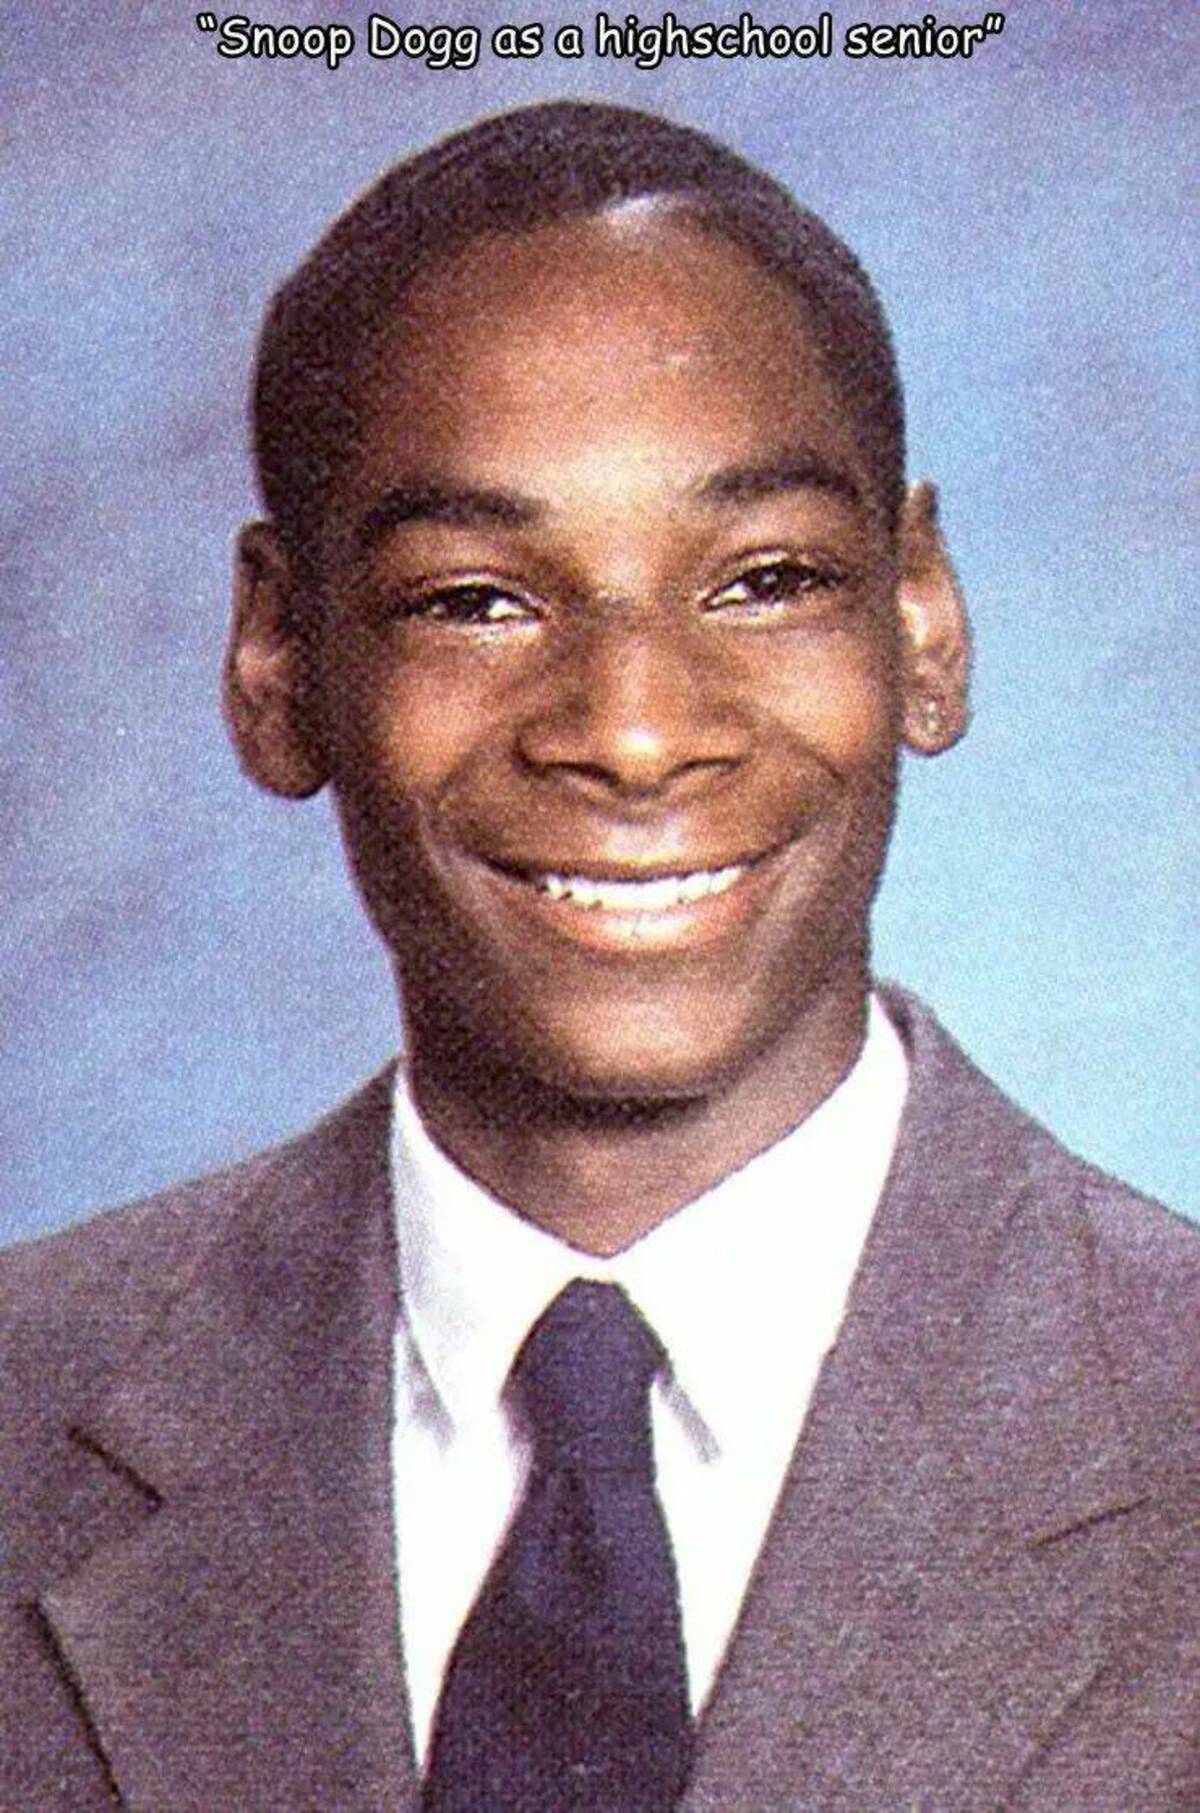 snoop dogg high school - "Snoop Dogg as a highschool senior"